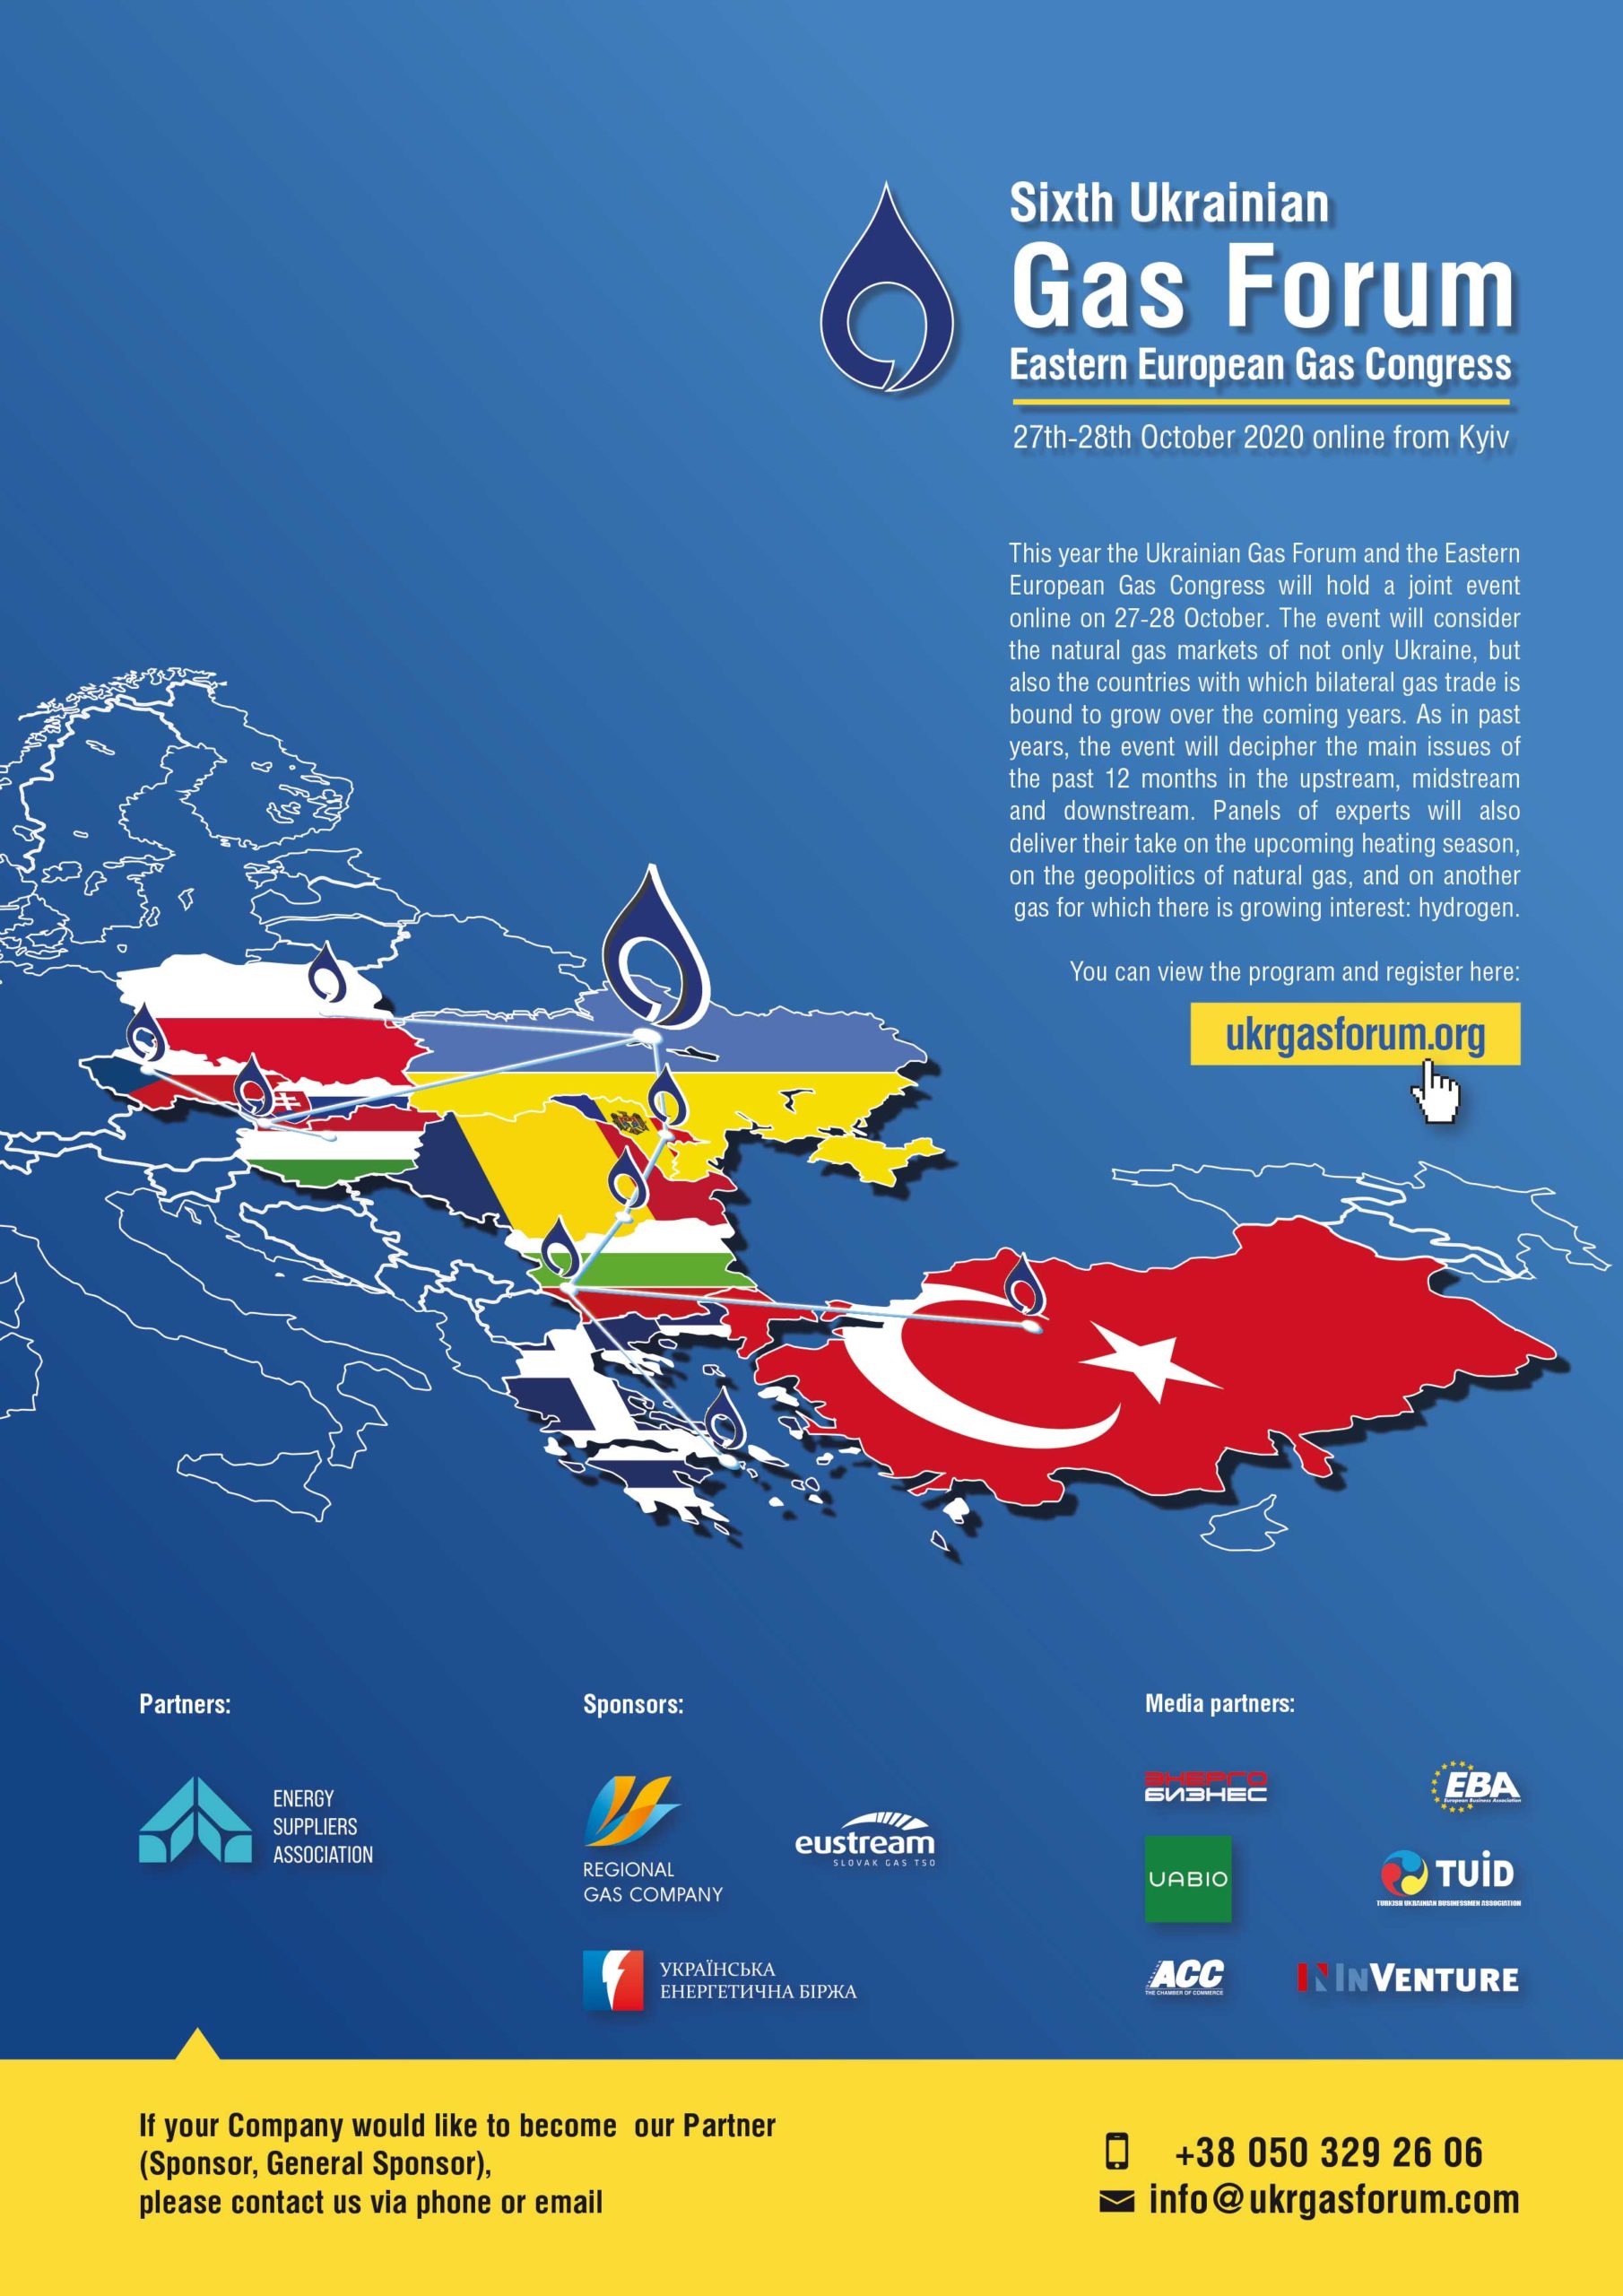 East European Gas Congress 2020